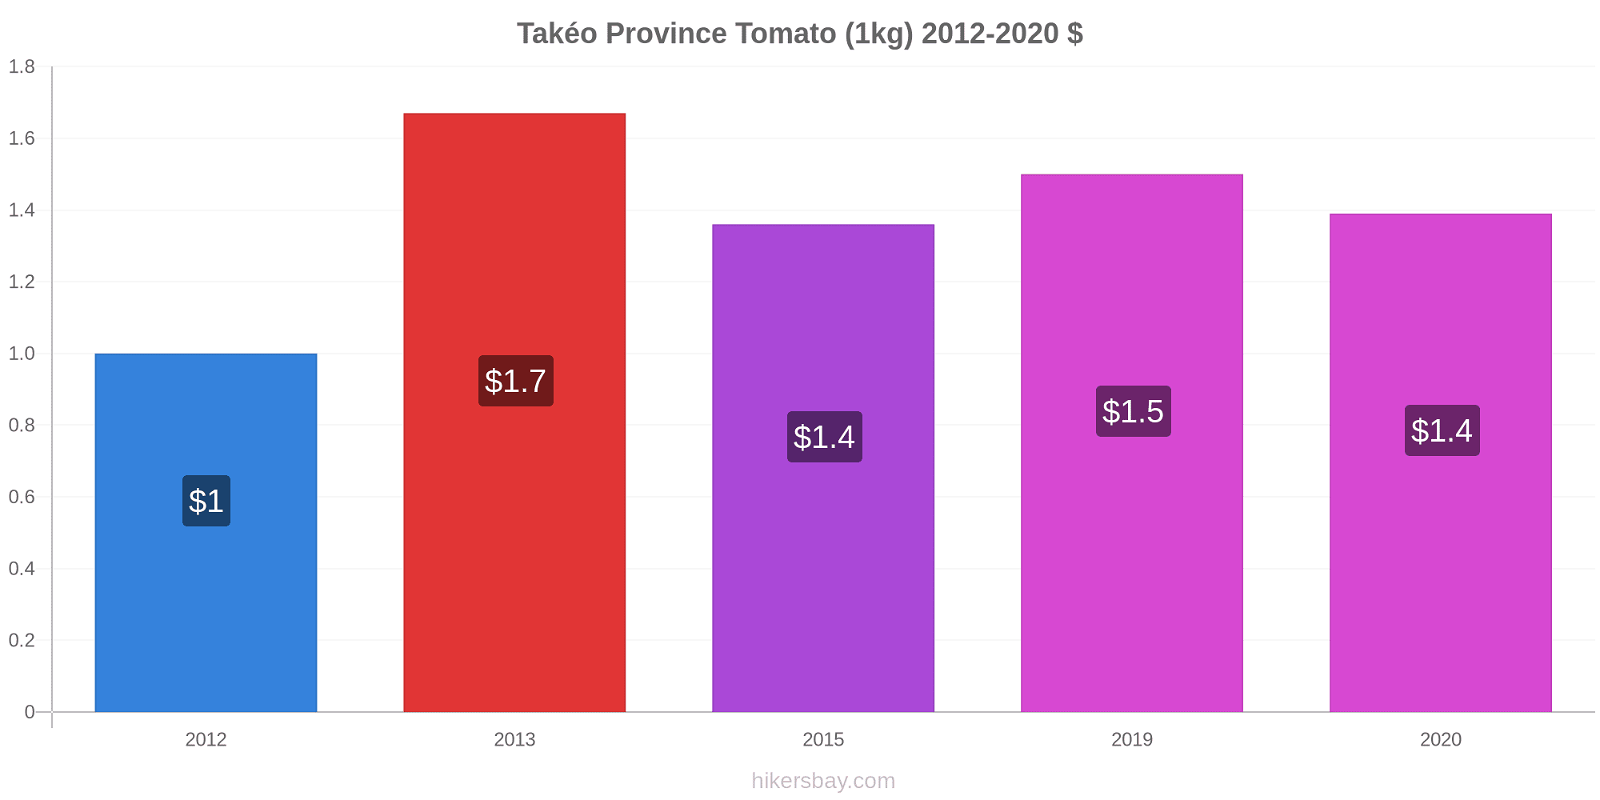 Takéo Province price changes Tomato (1kg) hikersbay.com